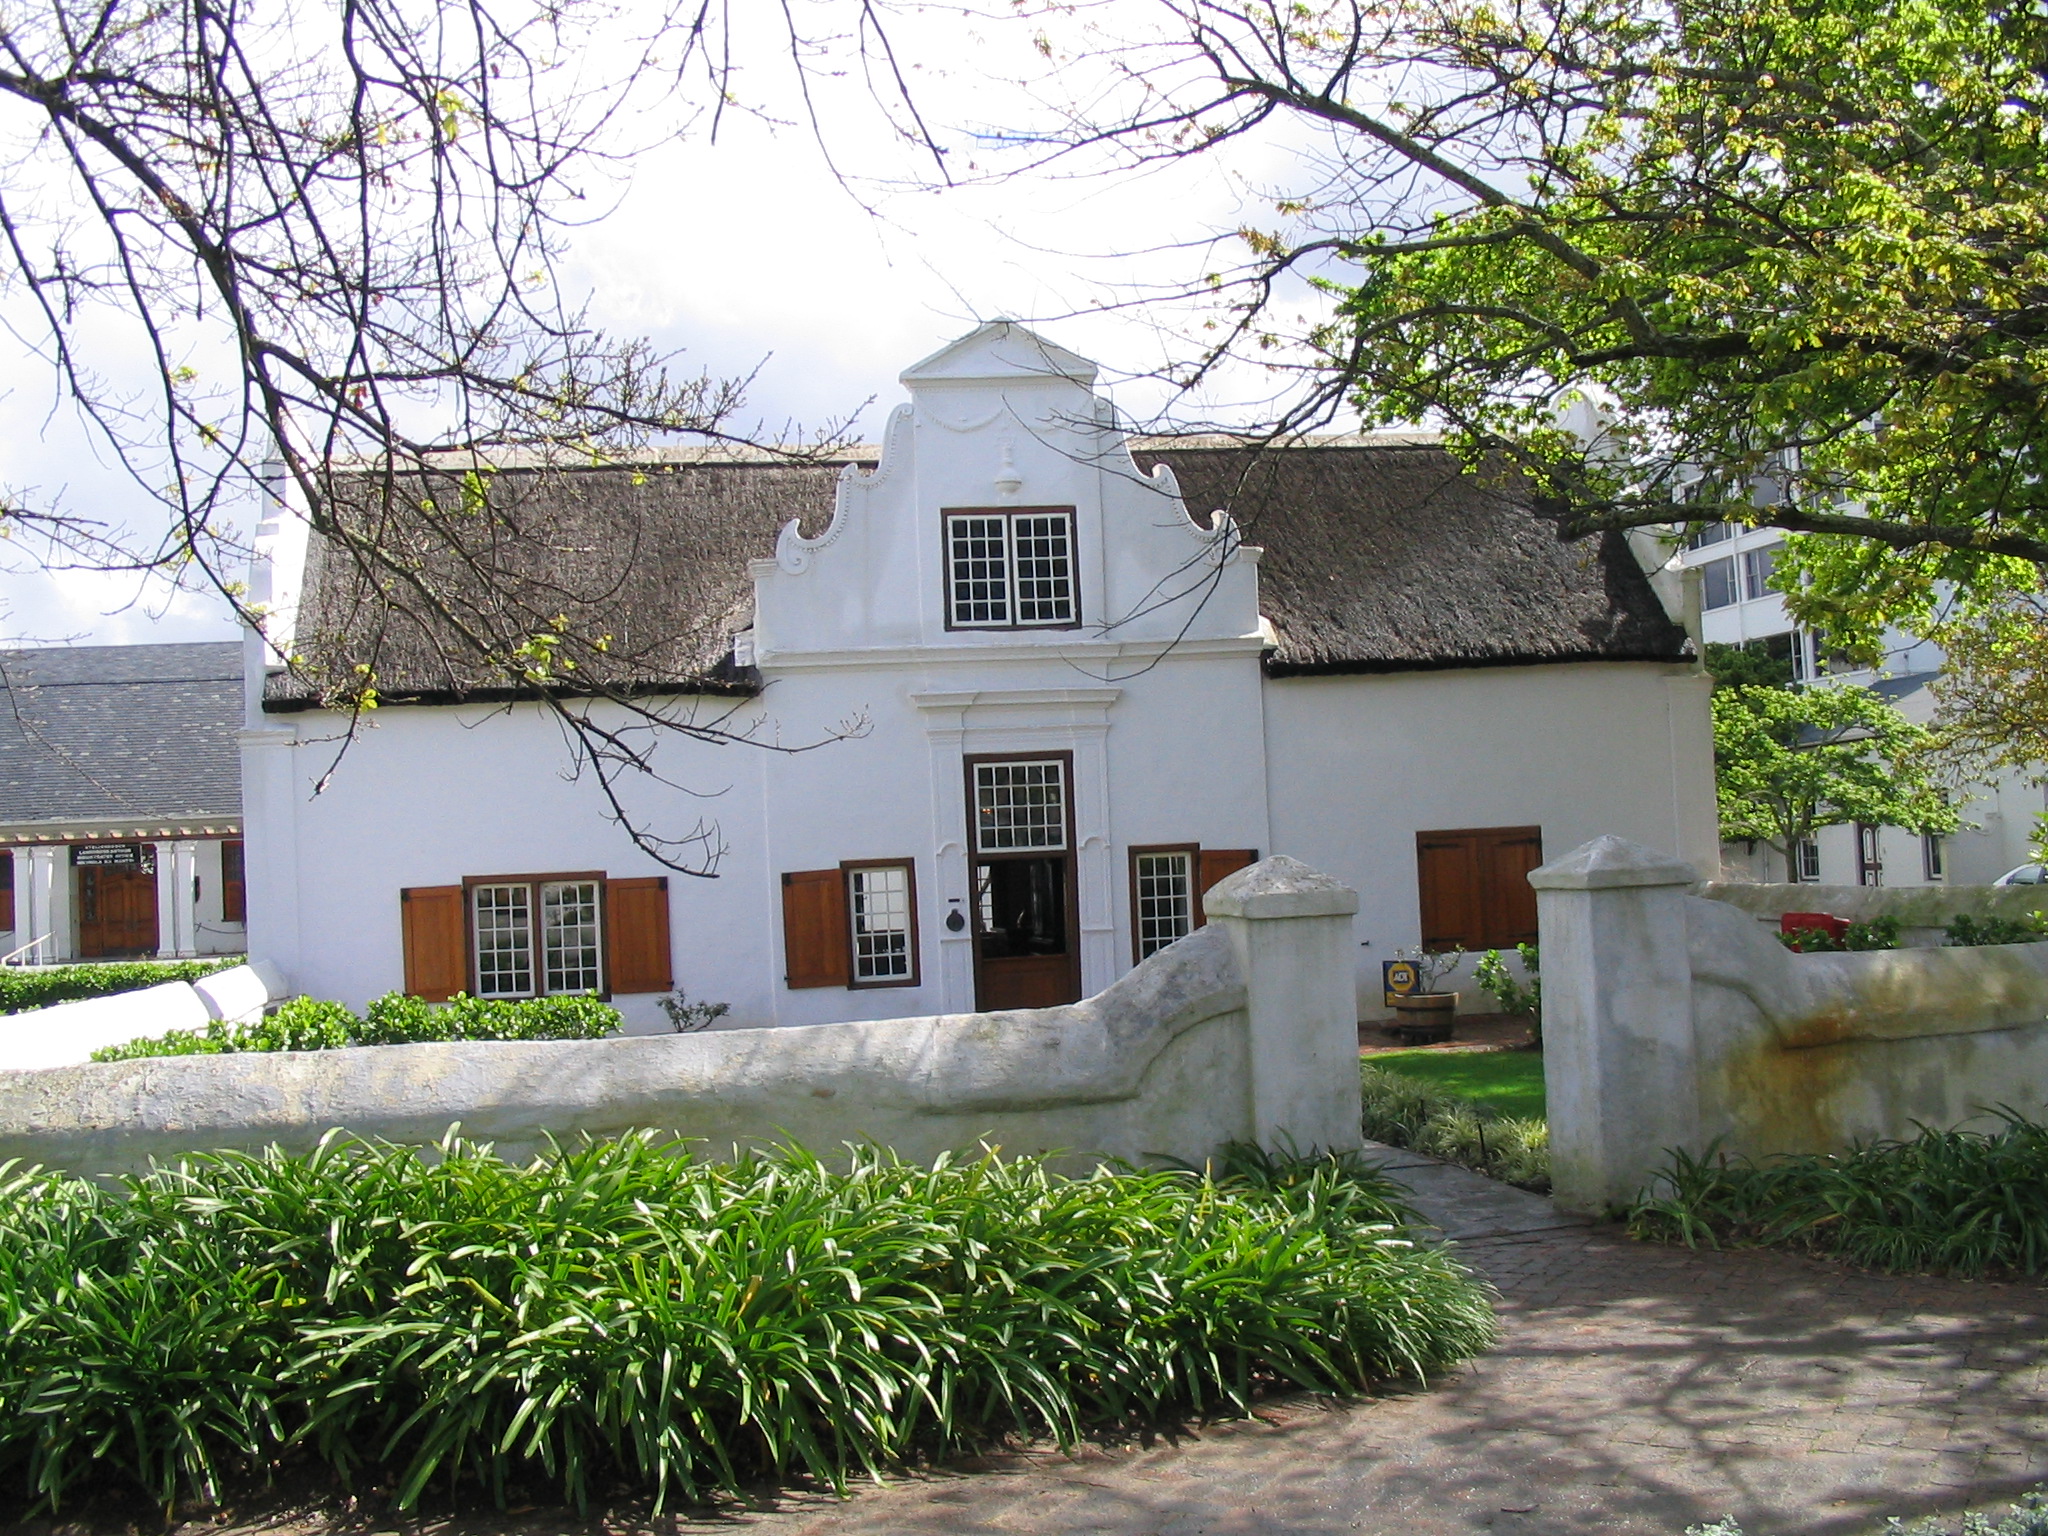 Cape Dutch Architecture Wikipedia